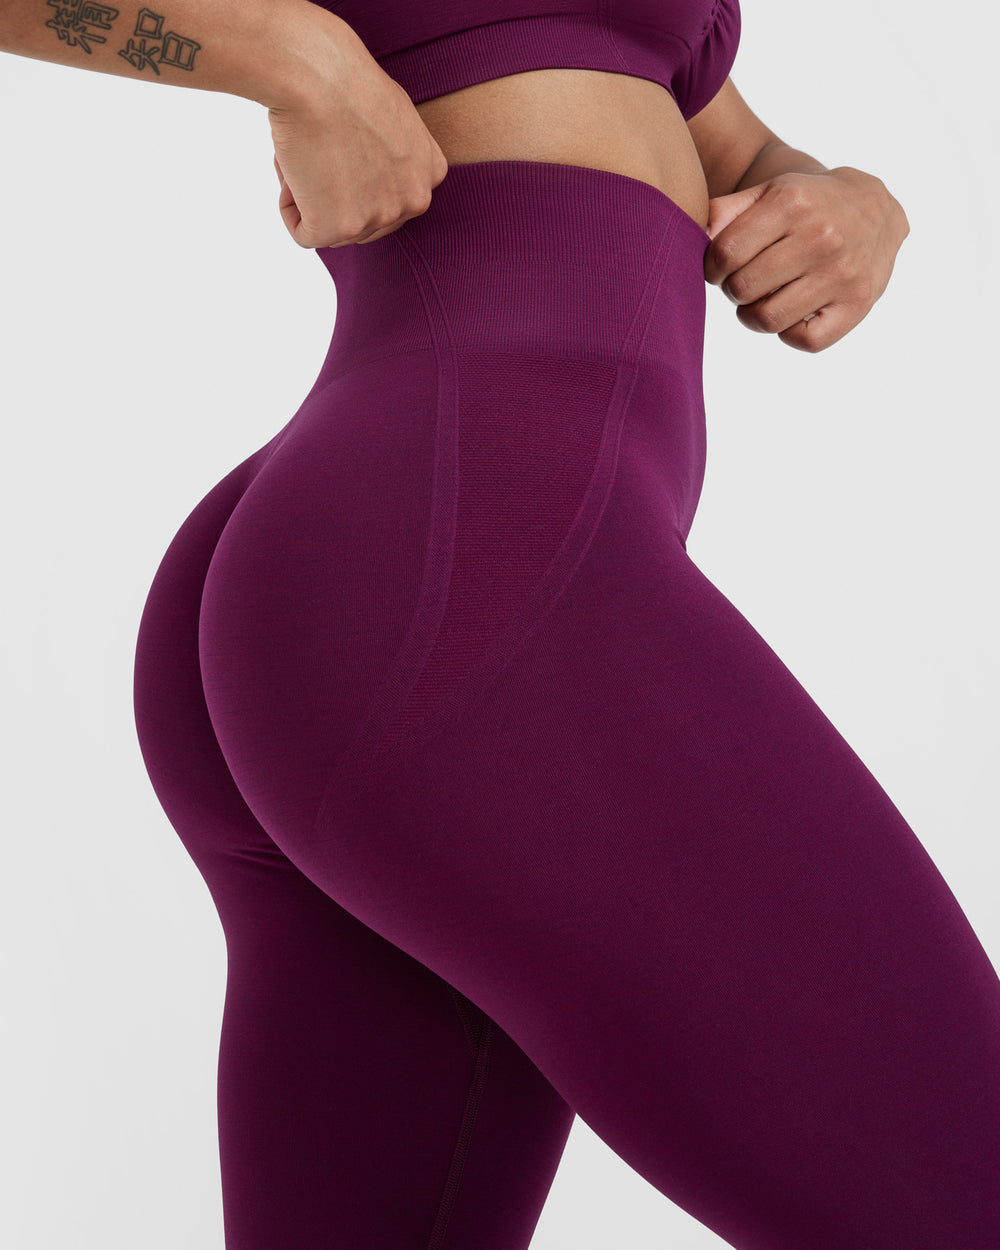 Seamless Oner active Leggings Women High Waist Yoga Pants Scrunch